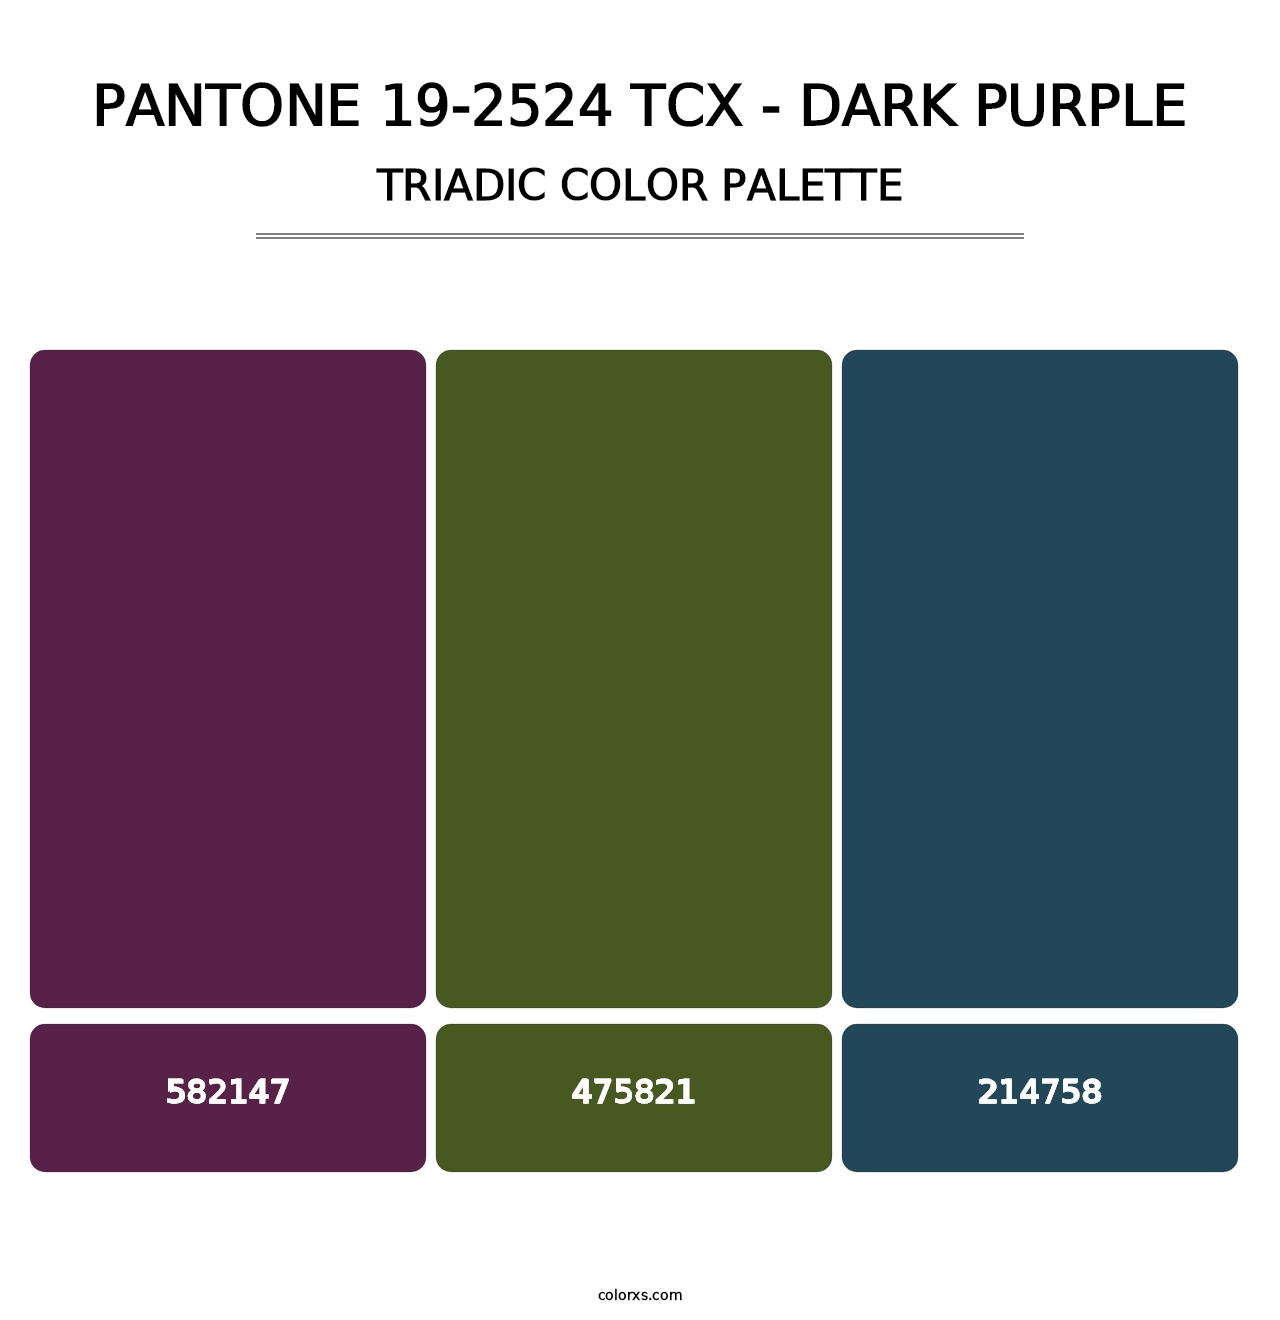 PANTONE 19-2524 TCX - Dark Purple - Triadic Color Palette